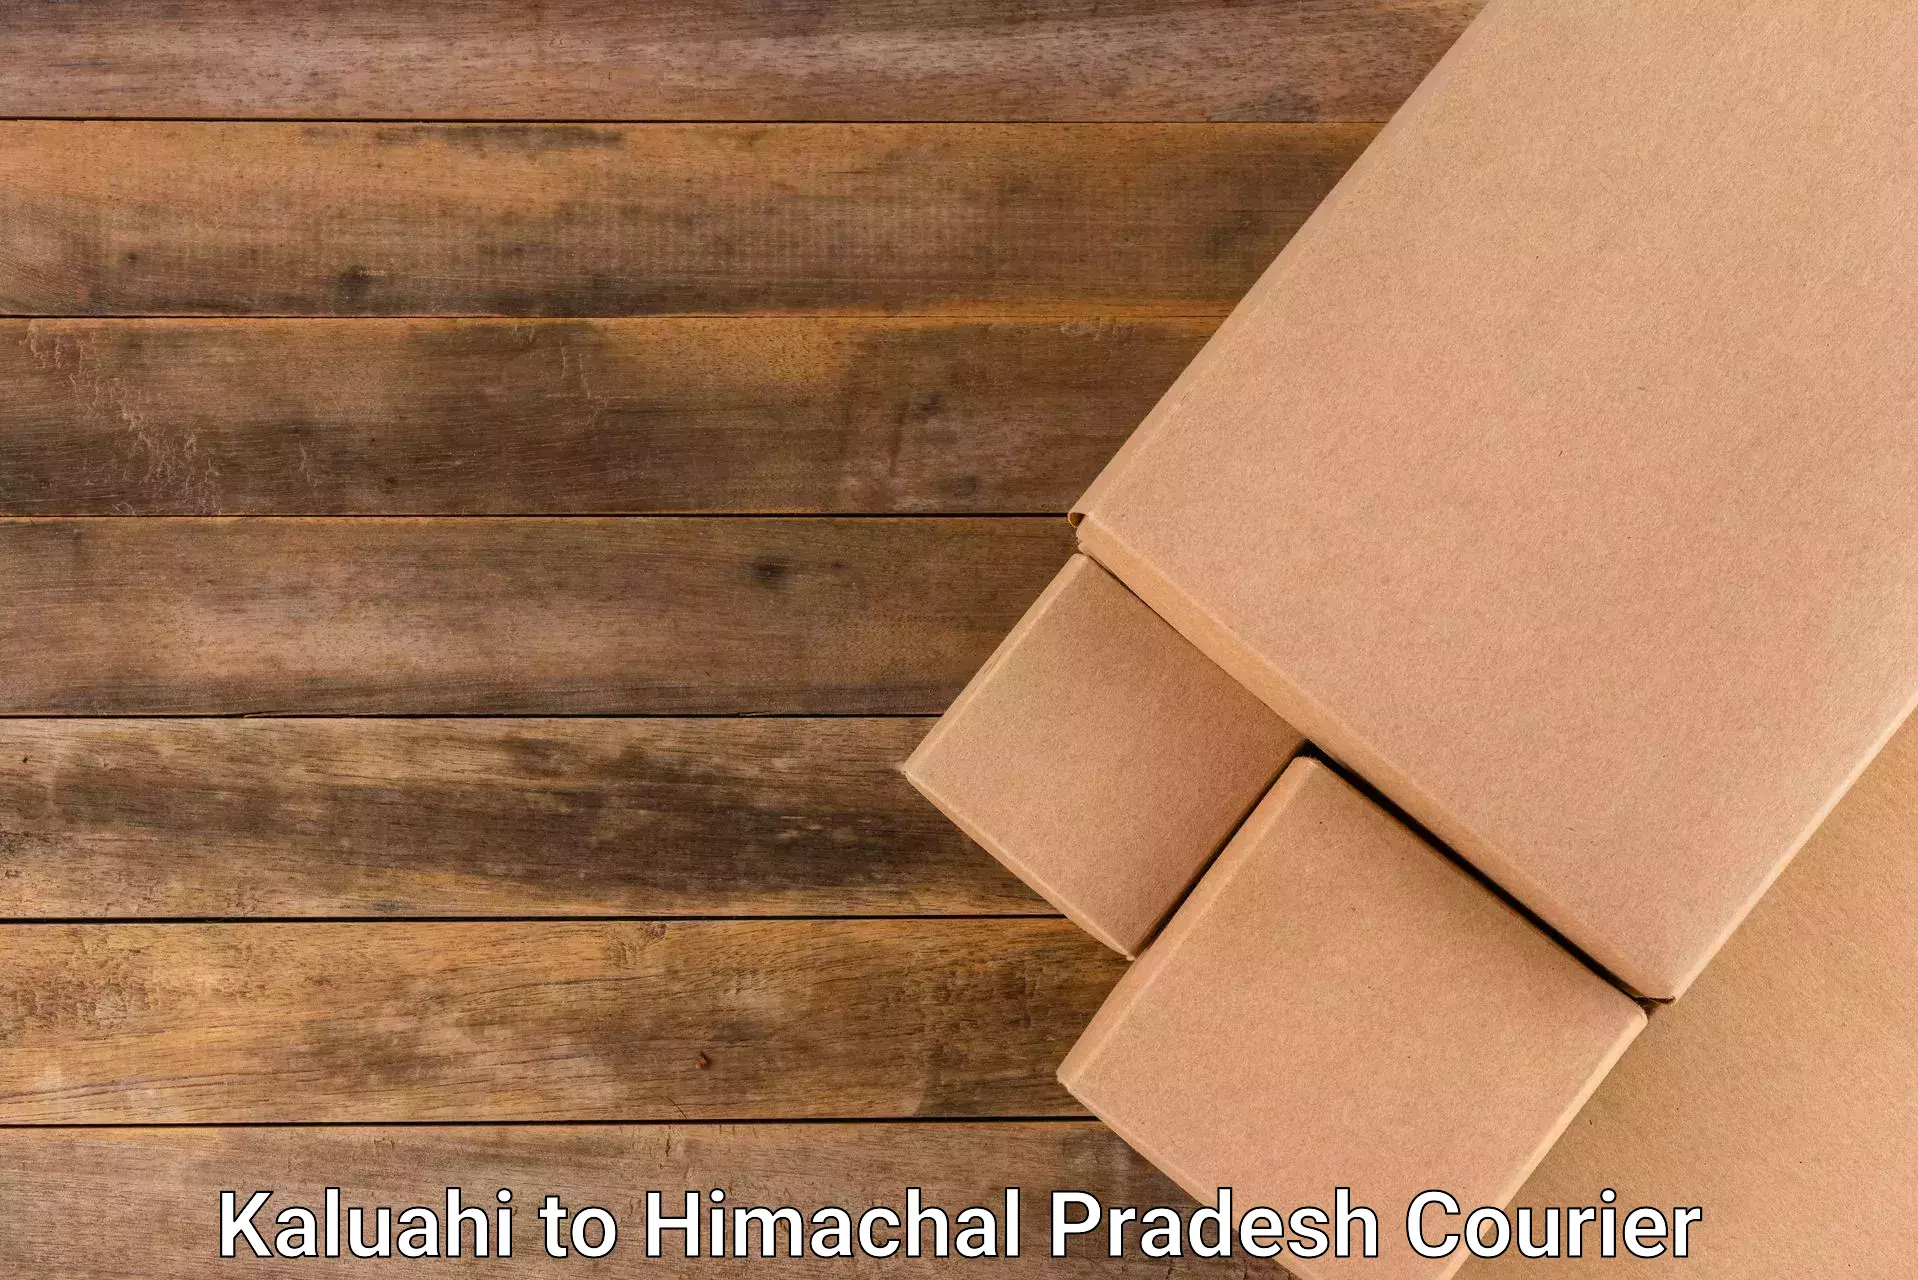 Logistics service provider Kaluahi to Himachal Pradesh